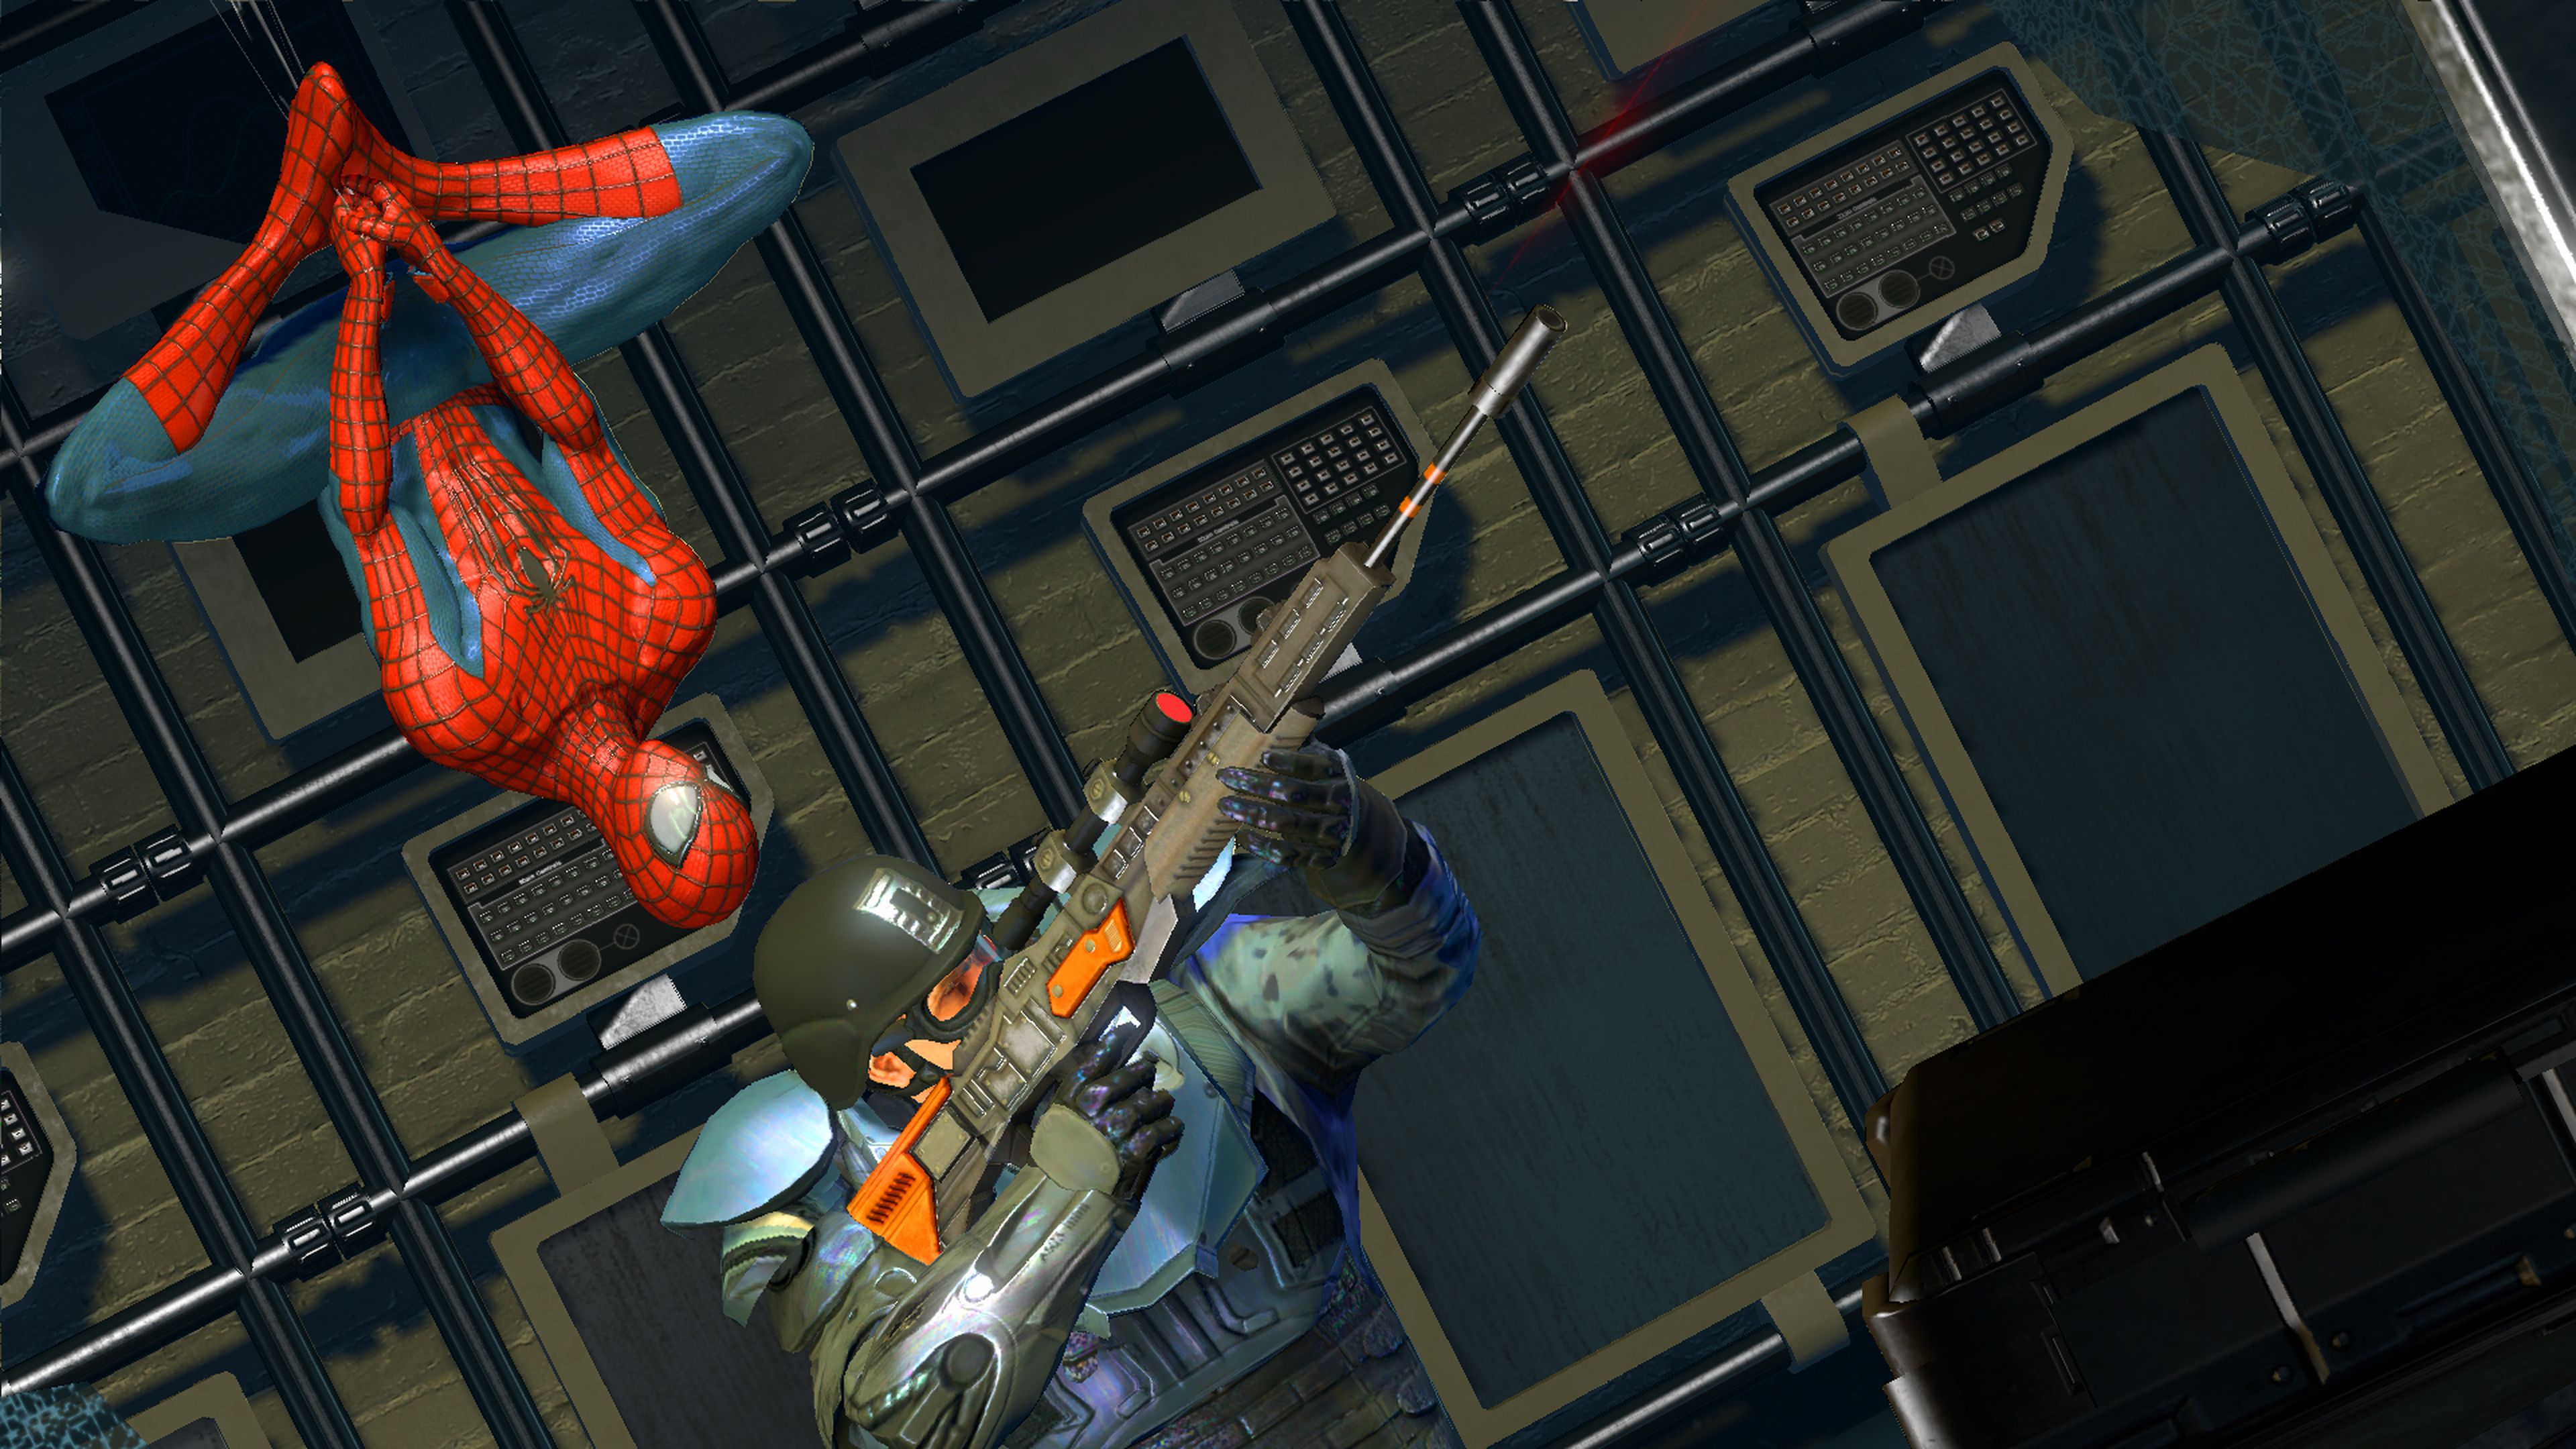 Игры 2014 февраль. The amazing Spider-man (игра, 2012). The amazing Spider-man 2 (игра, 2014). Человек паук Амейзинг 2. Spider man 2014 игра.